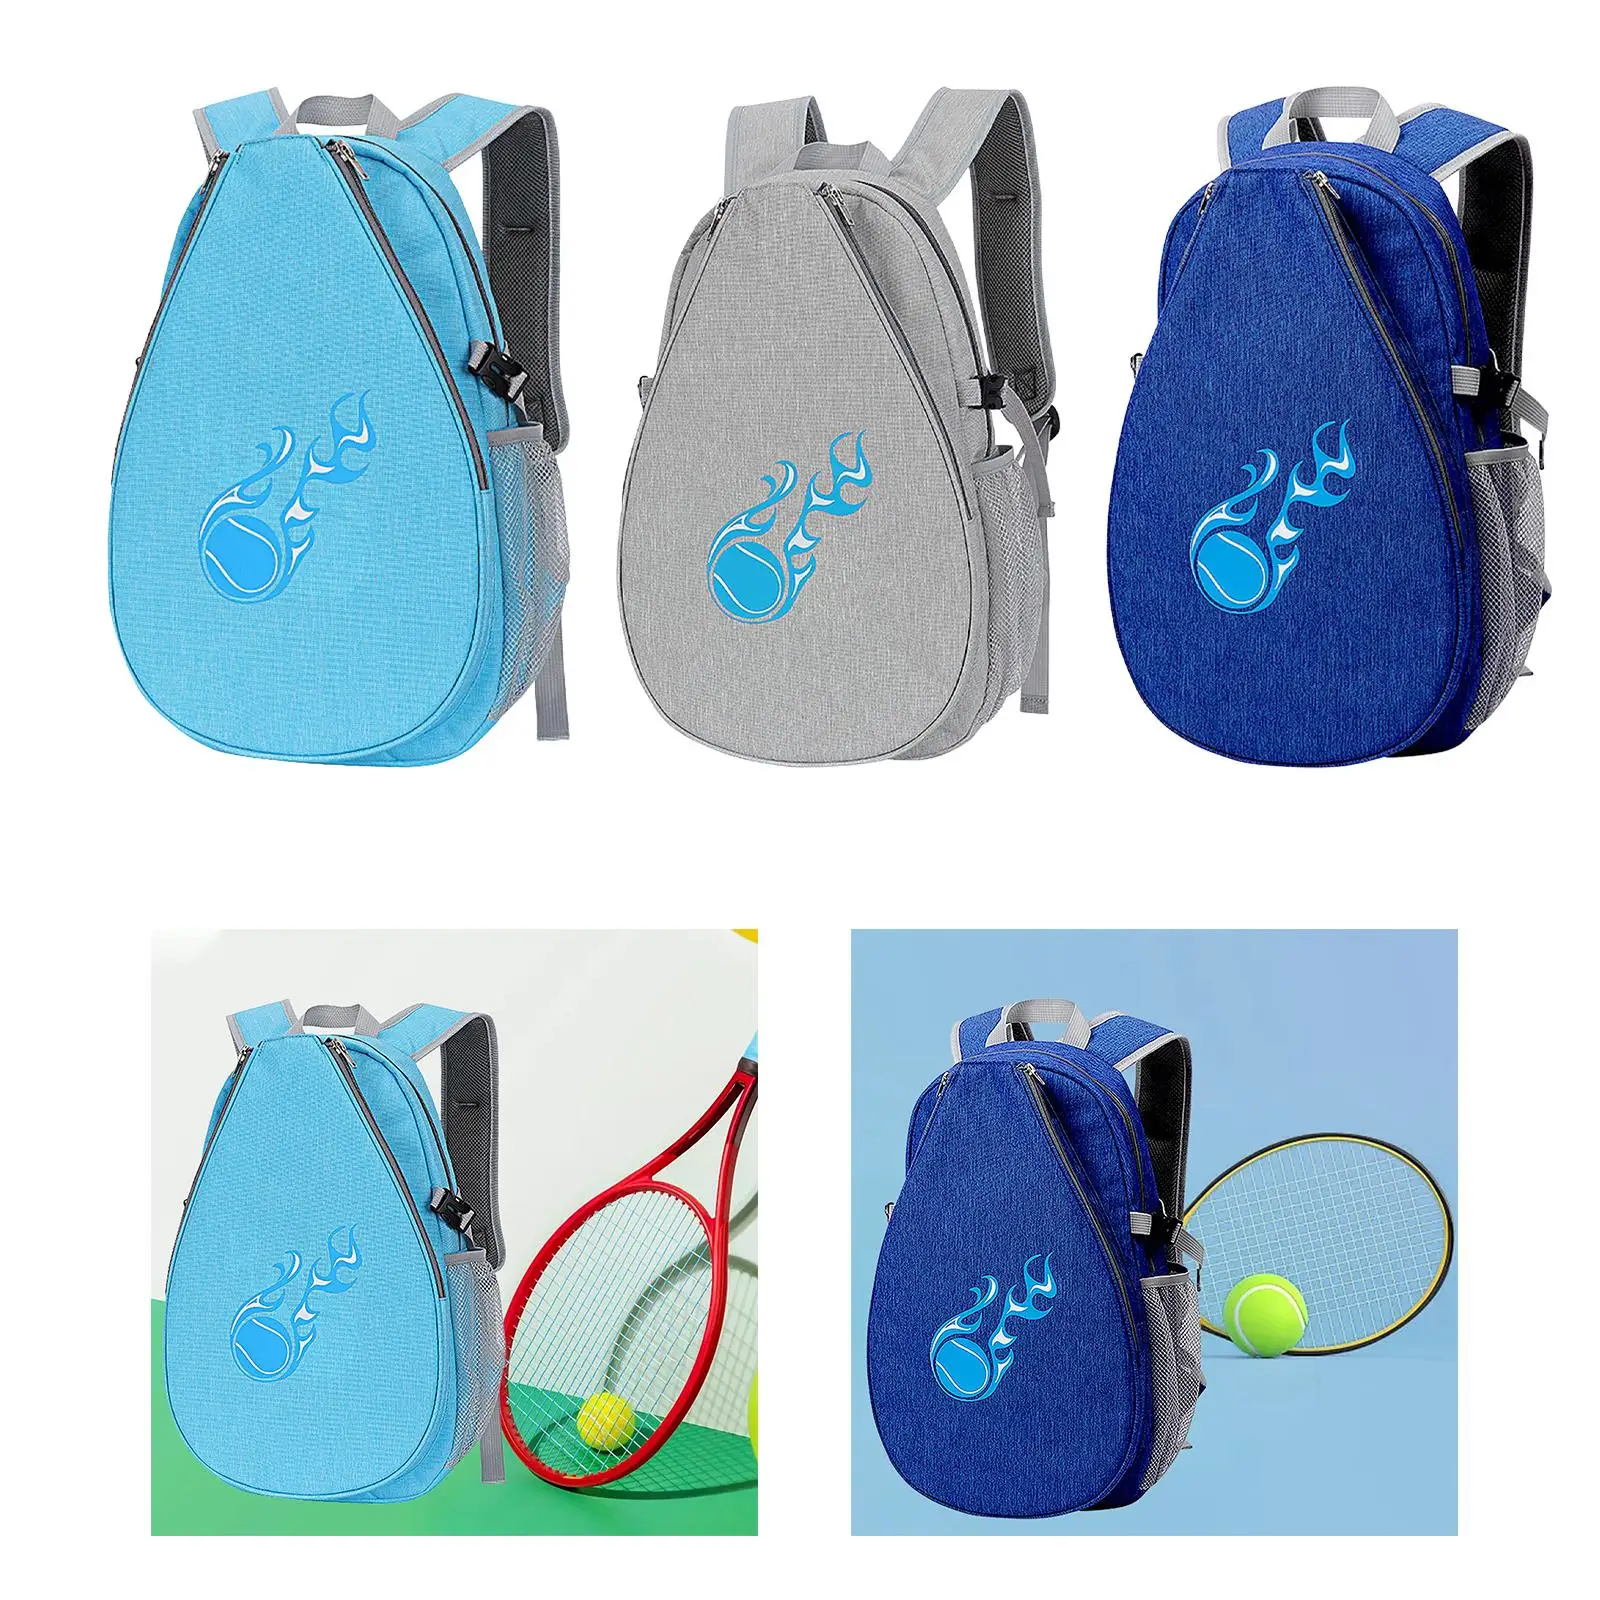 Tennis Backpack Portable Racquet Carrying Bag Tennis Bag Large Capacity for Squash Racquet, Badminton Racquet, Tennis Racket